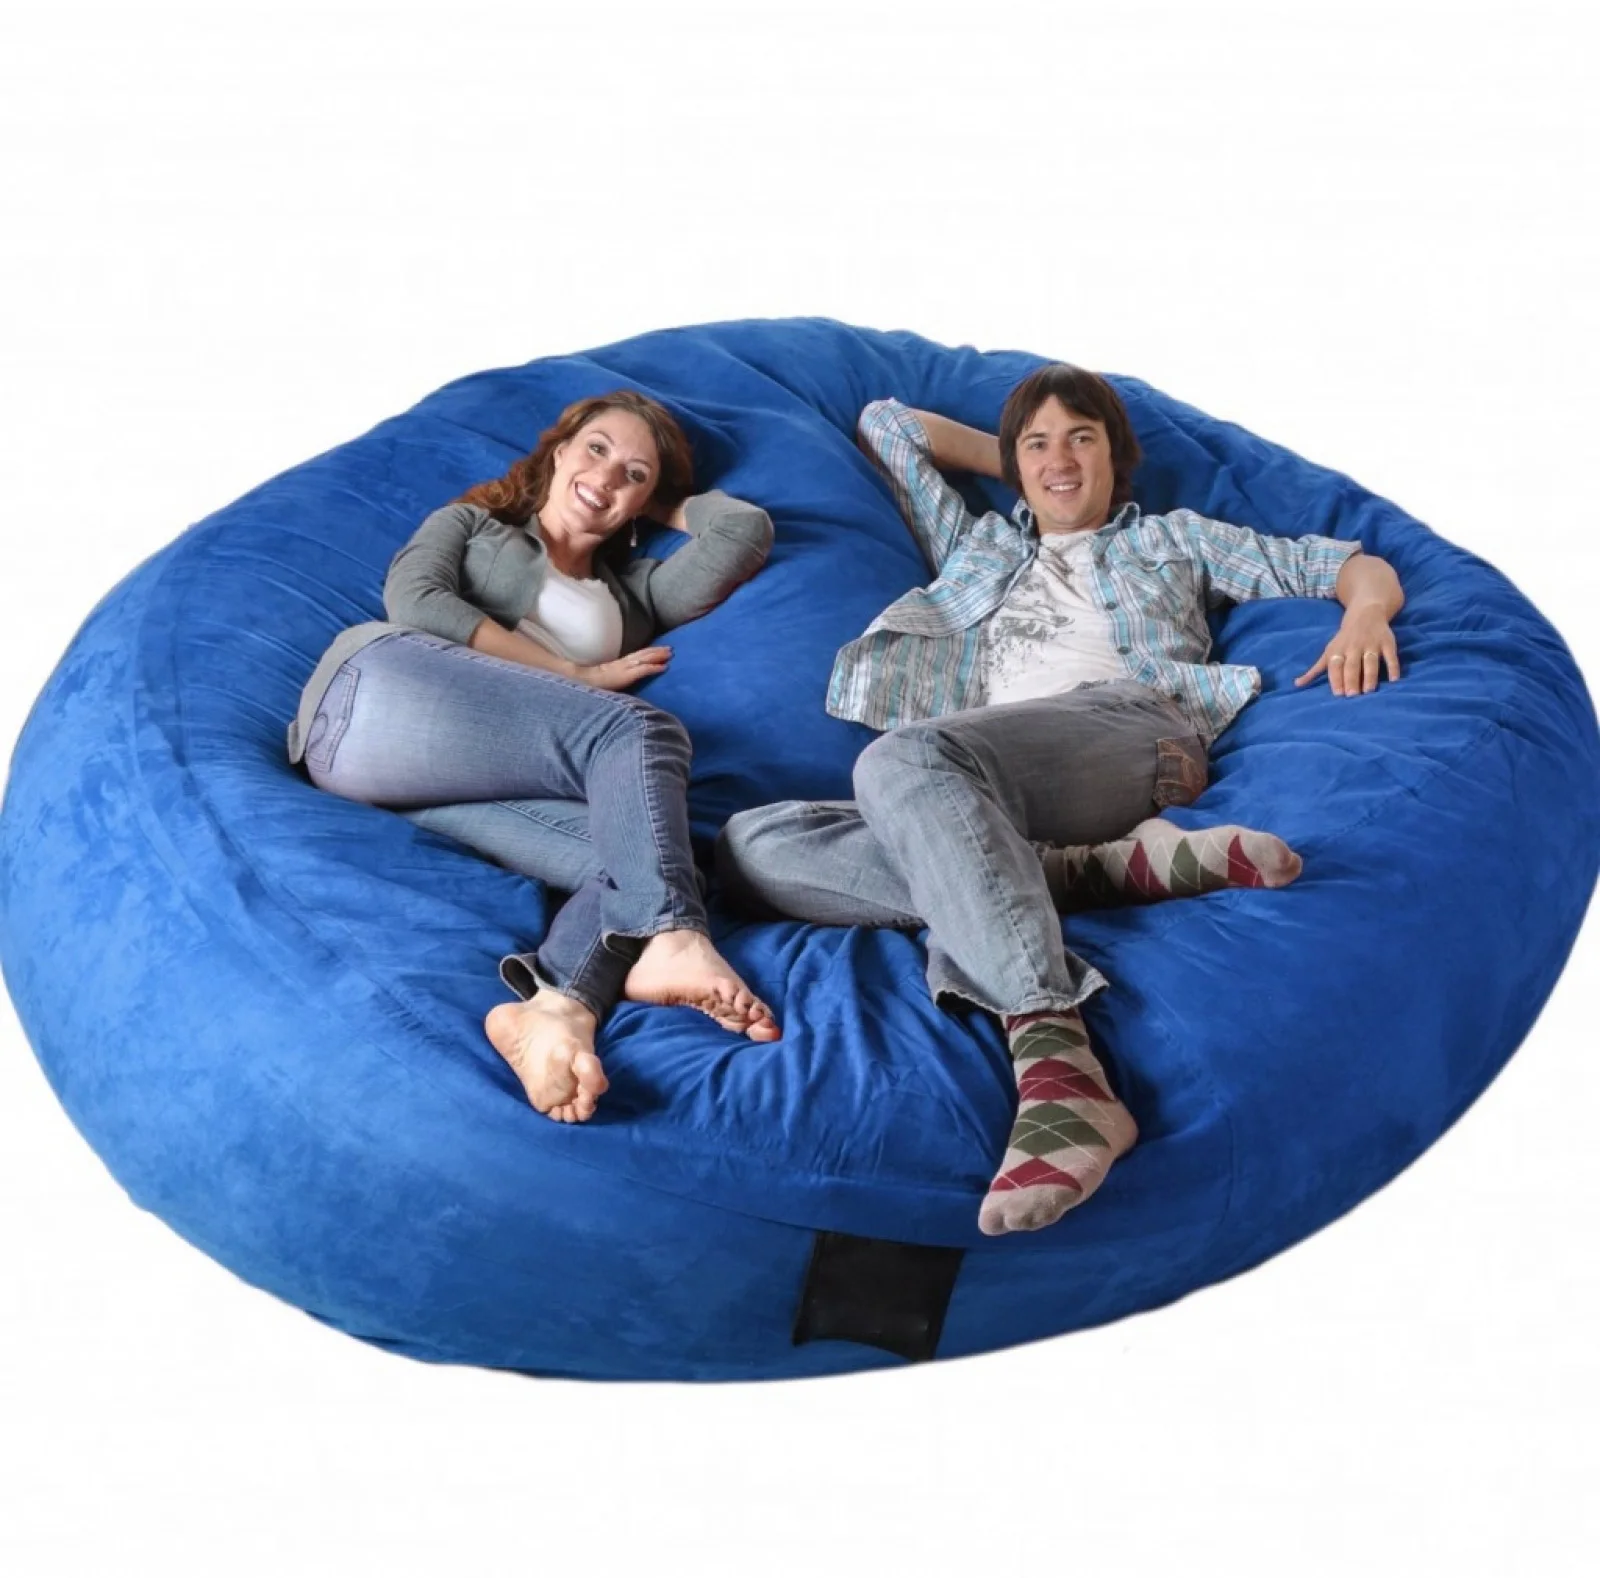 Giant Modern Single Sofa Bed Cheap Bean Bag Furniture For Sale - Buy Giant Bean Bag,Sofa Bed ...